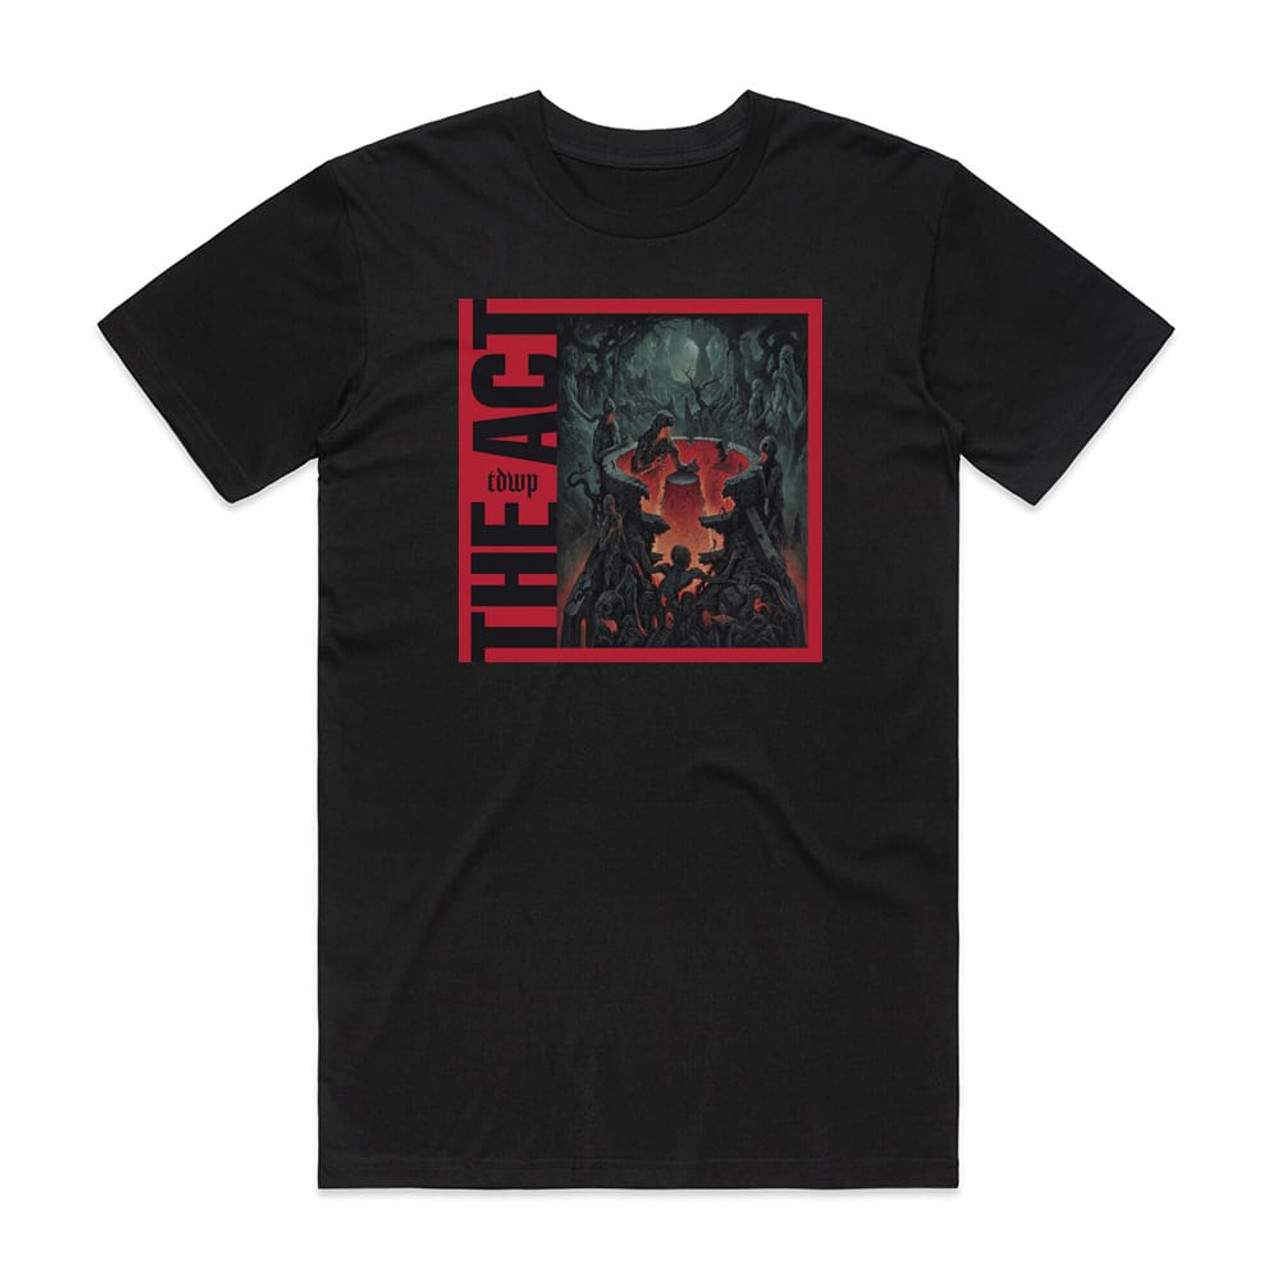 The Devil Wears Prada The Act Album Cover T-Shirt Black